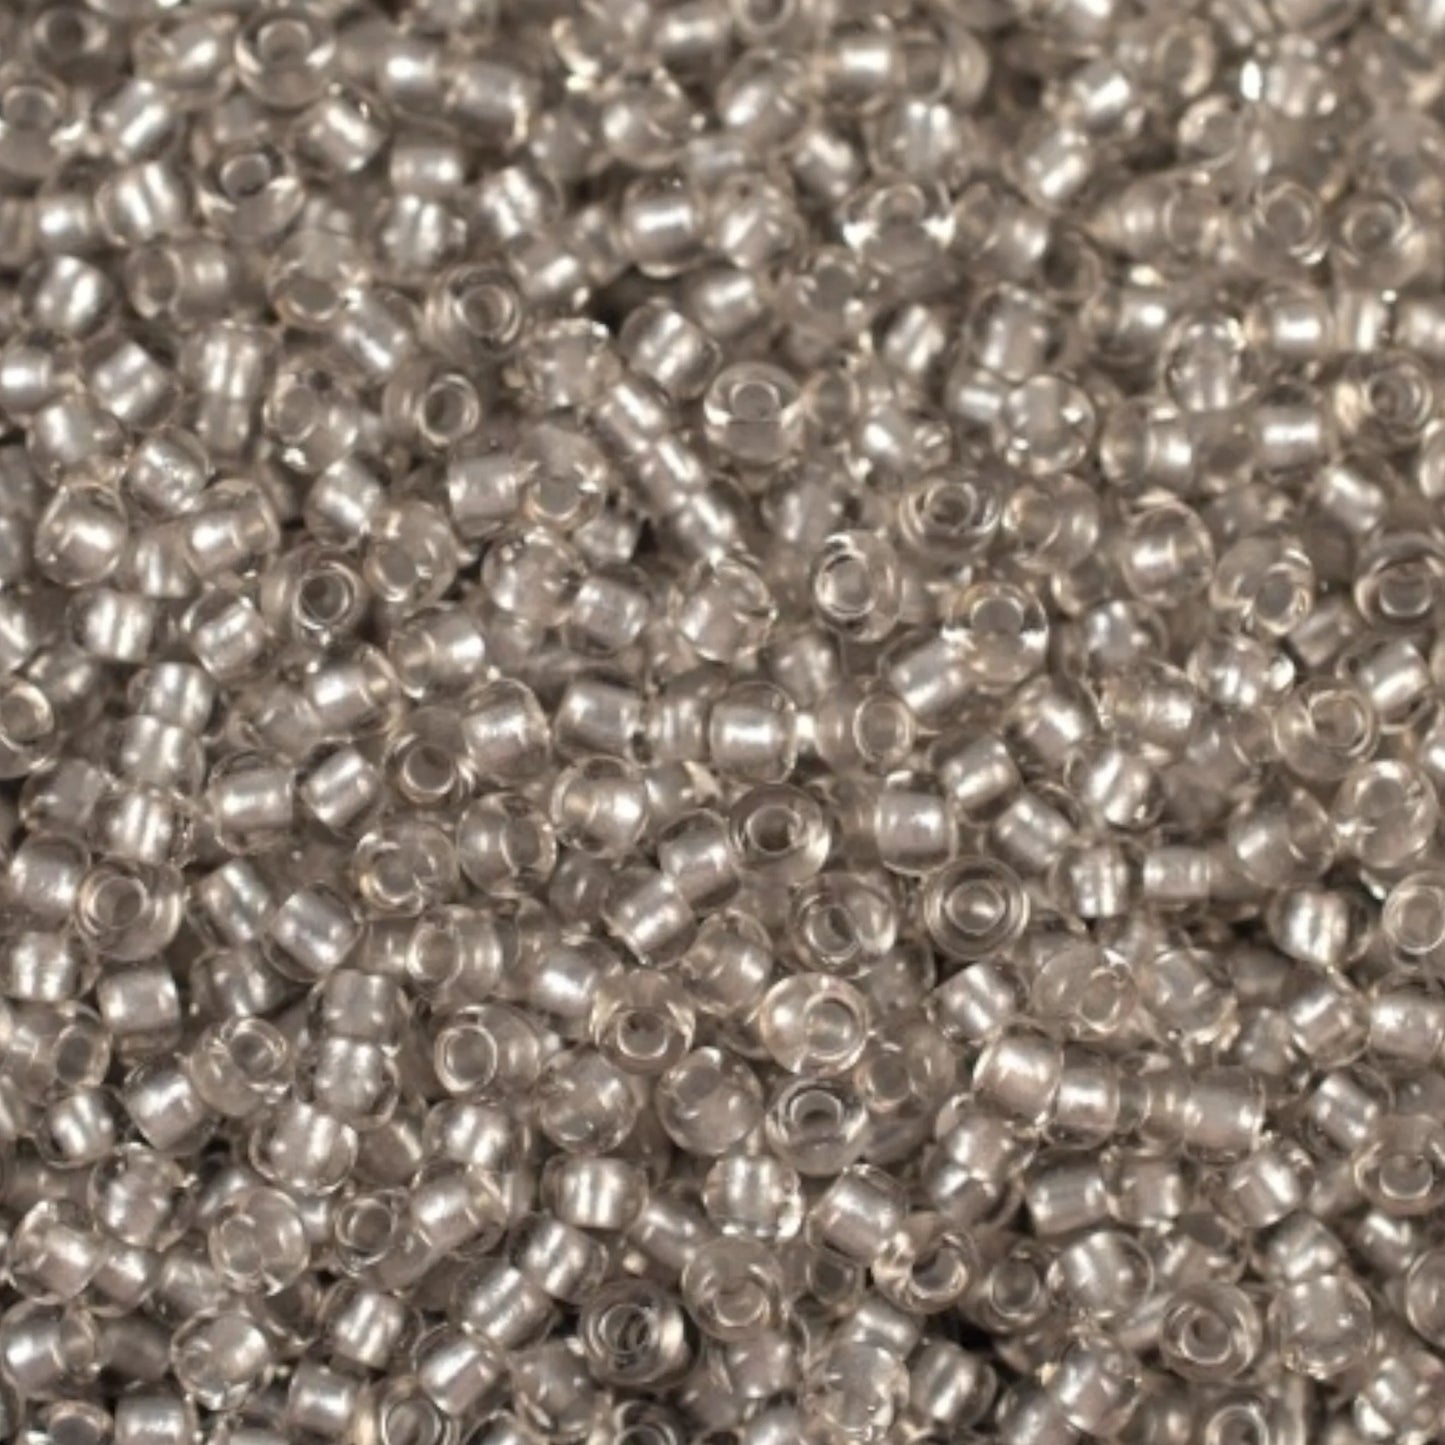 38249 Czech seed beads PRECIOSA Rocailles 10/0 grey. Crystal - Terra Pearl Lined.